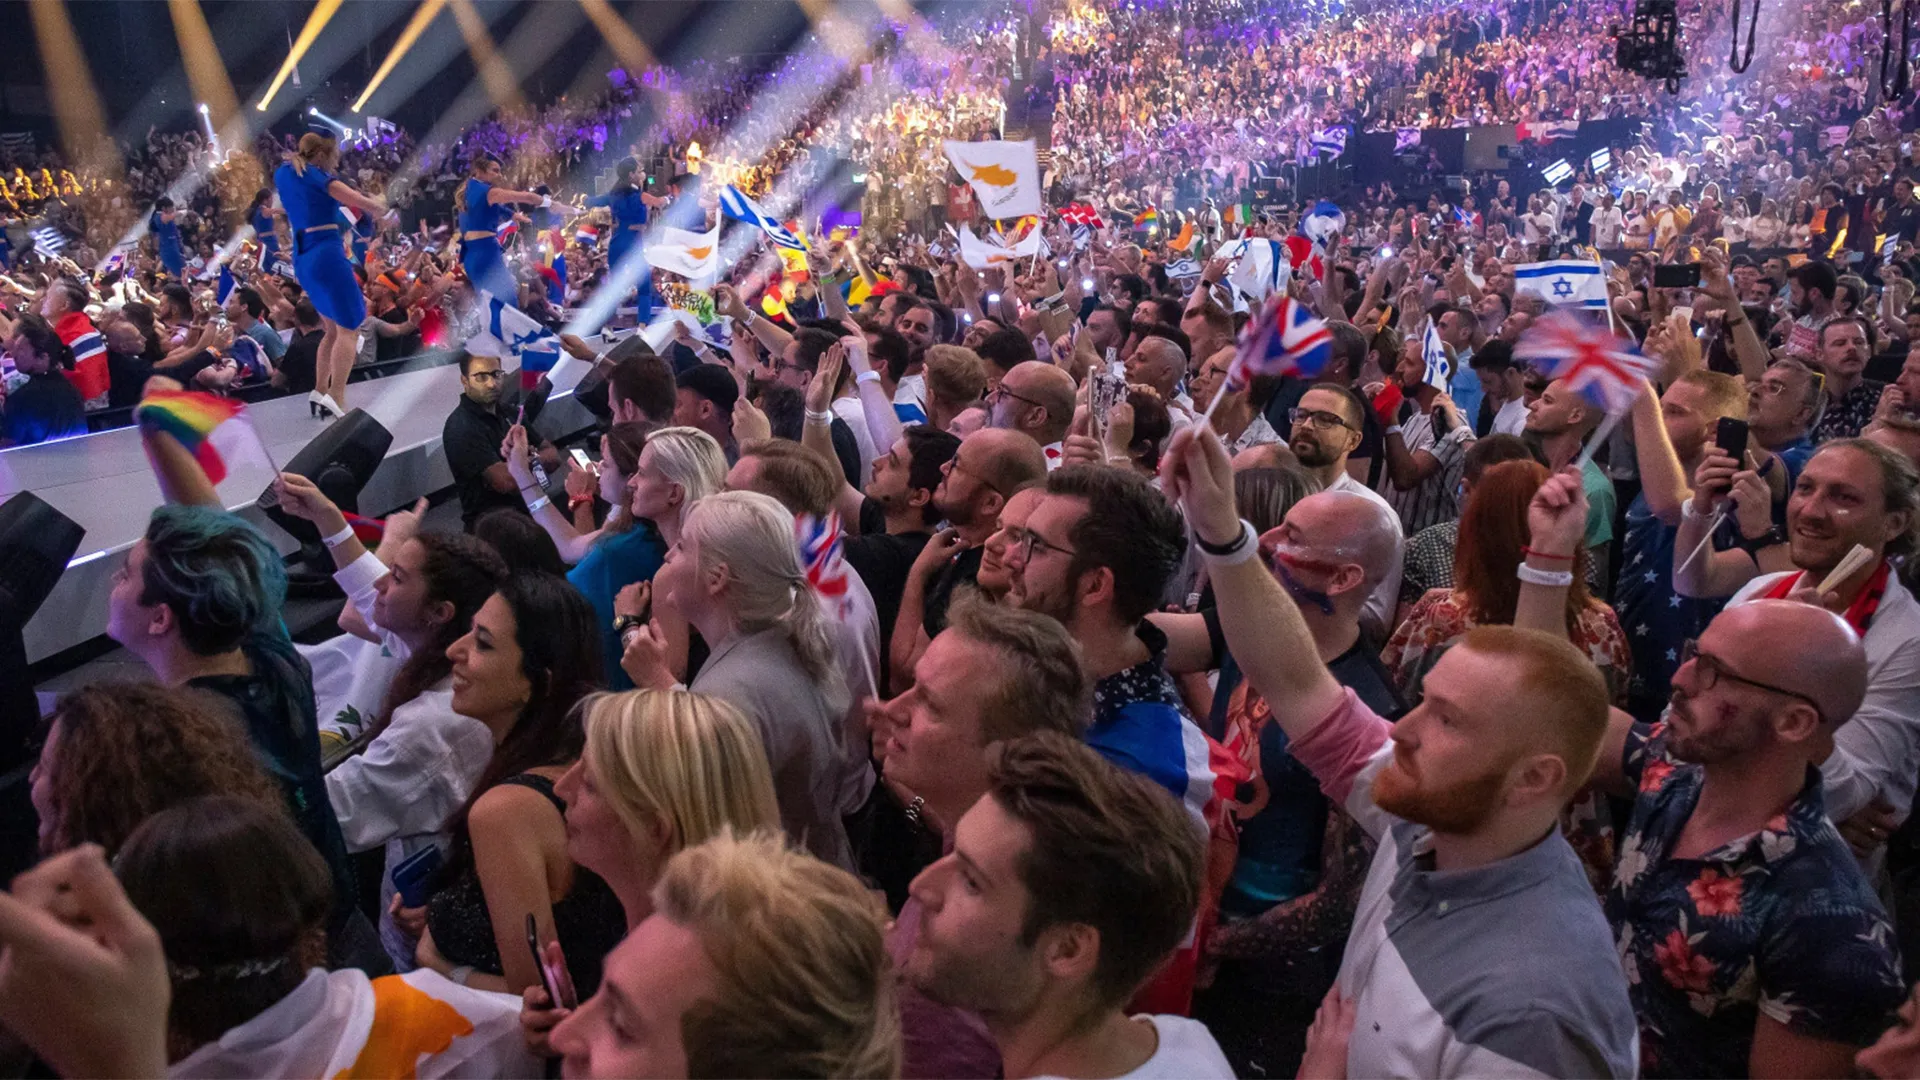 Eurovision fans